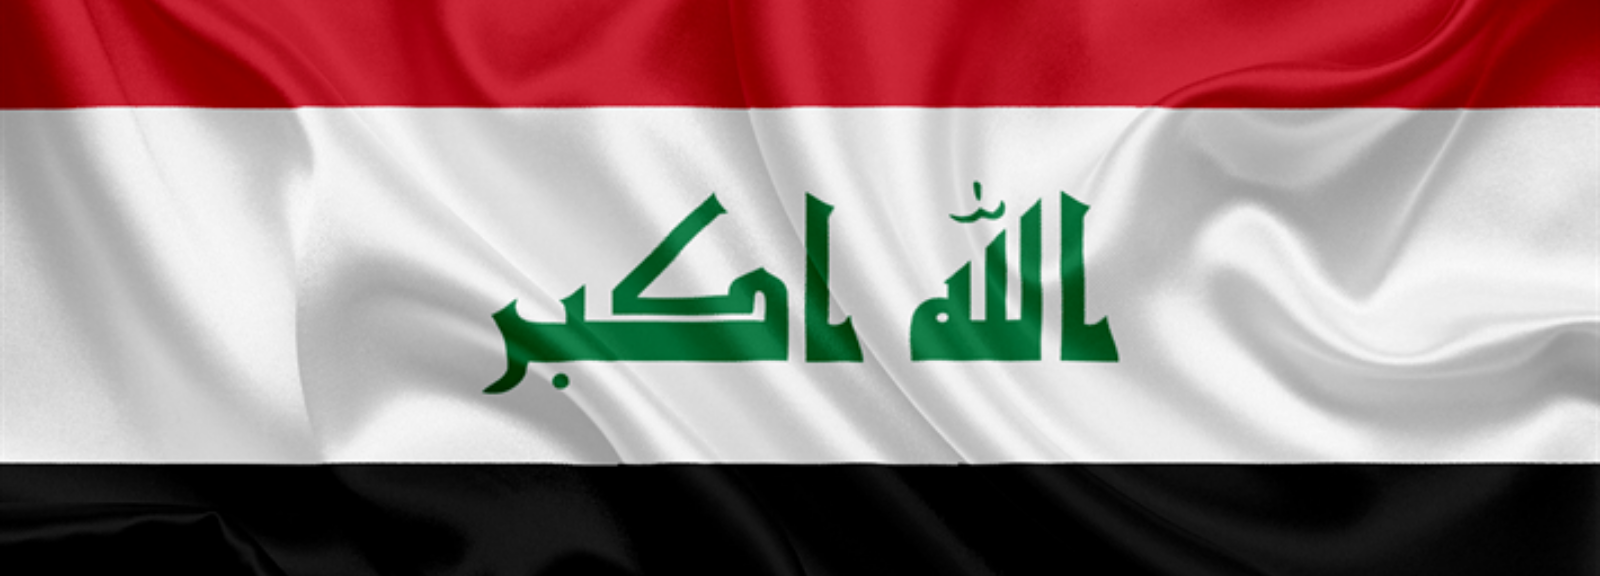 Flag of Iraq on a flagpole.